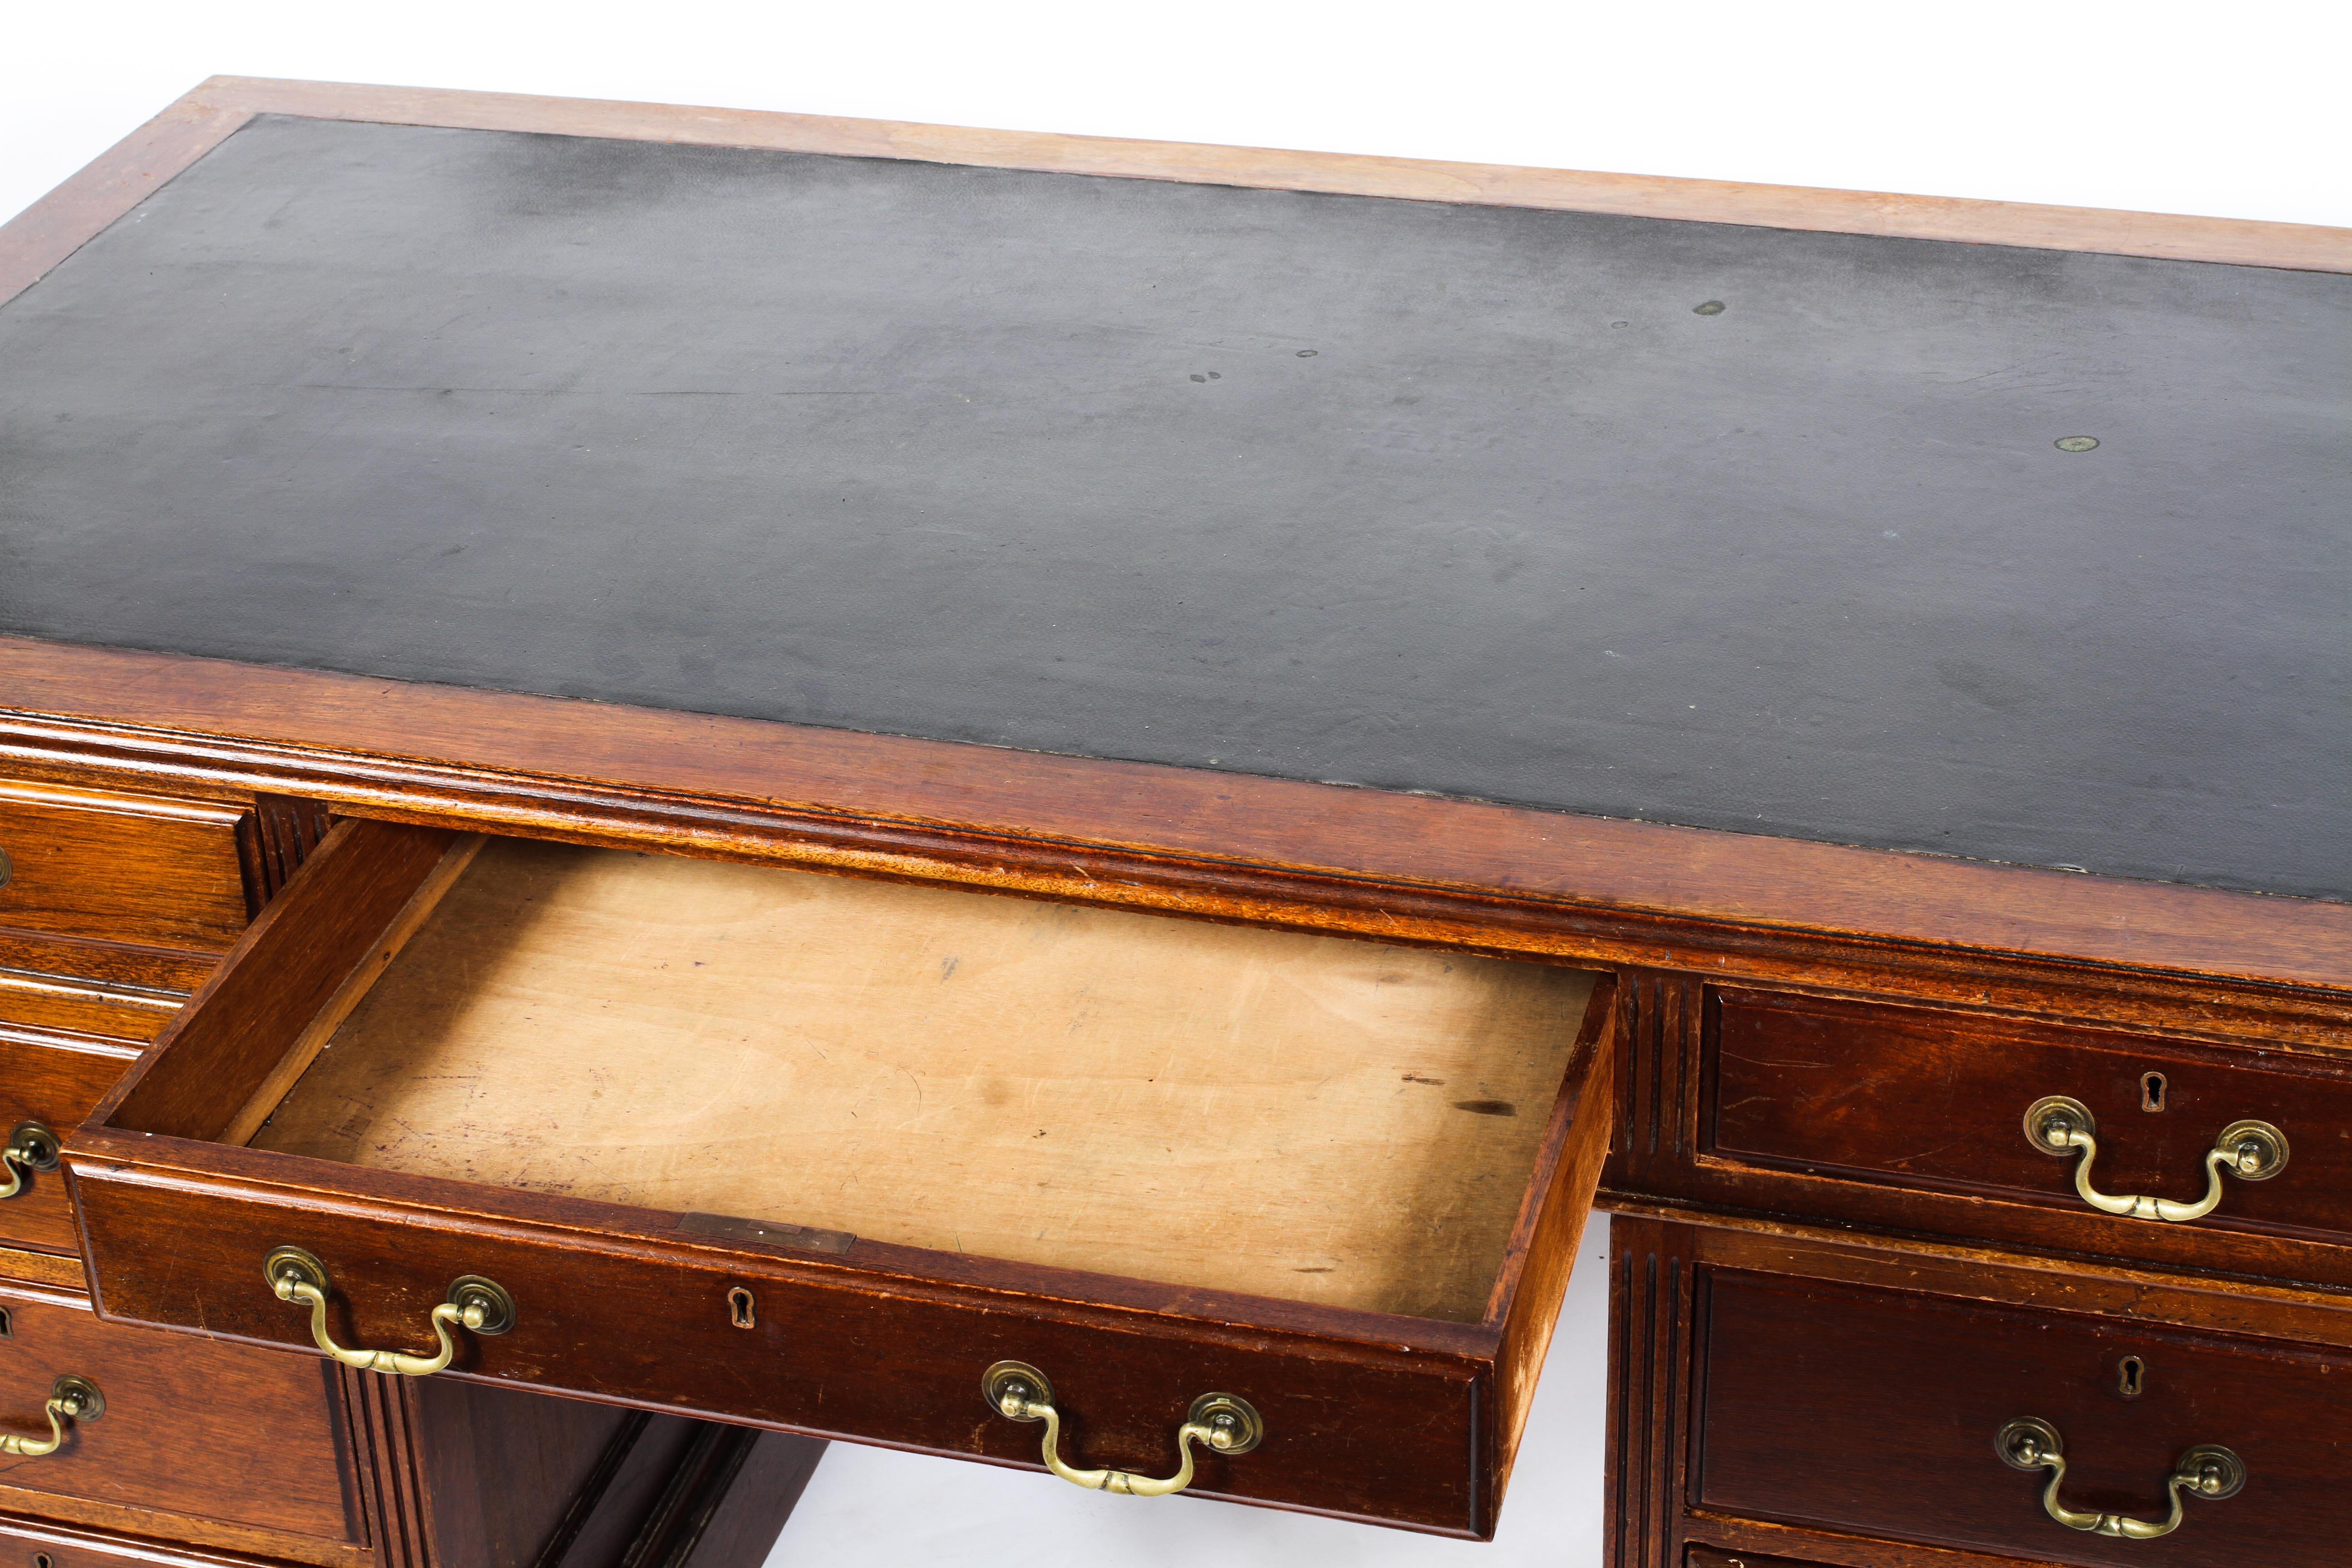 An Edwardian pedestal desk with leather inset top on plinth base, 148cm x 80cm x 75cm. - Image 2 of 2